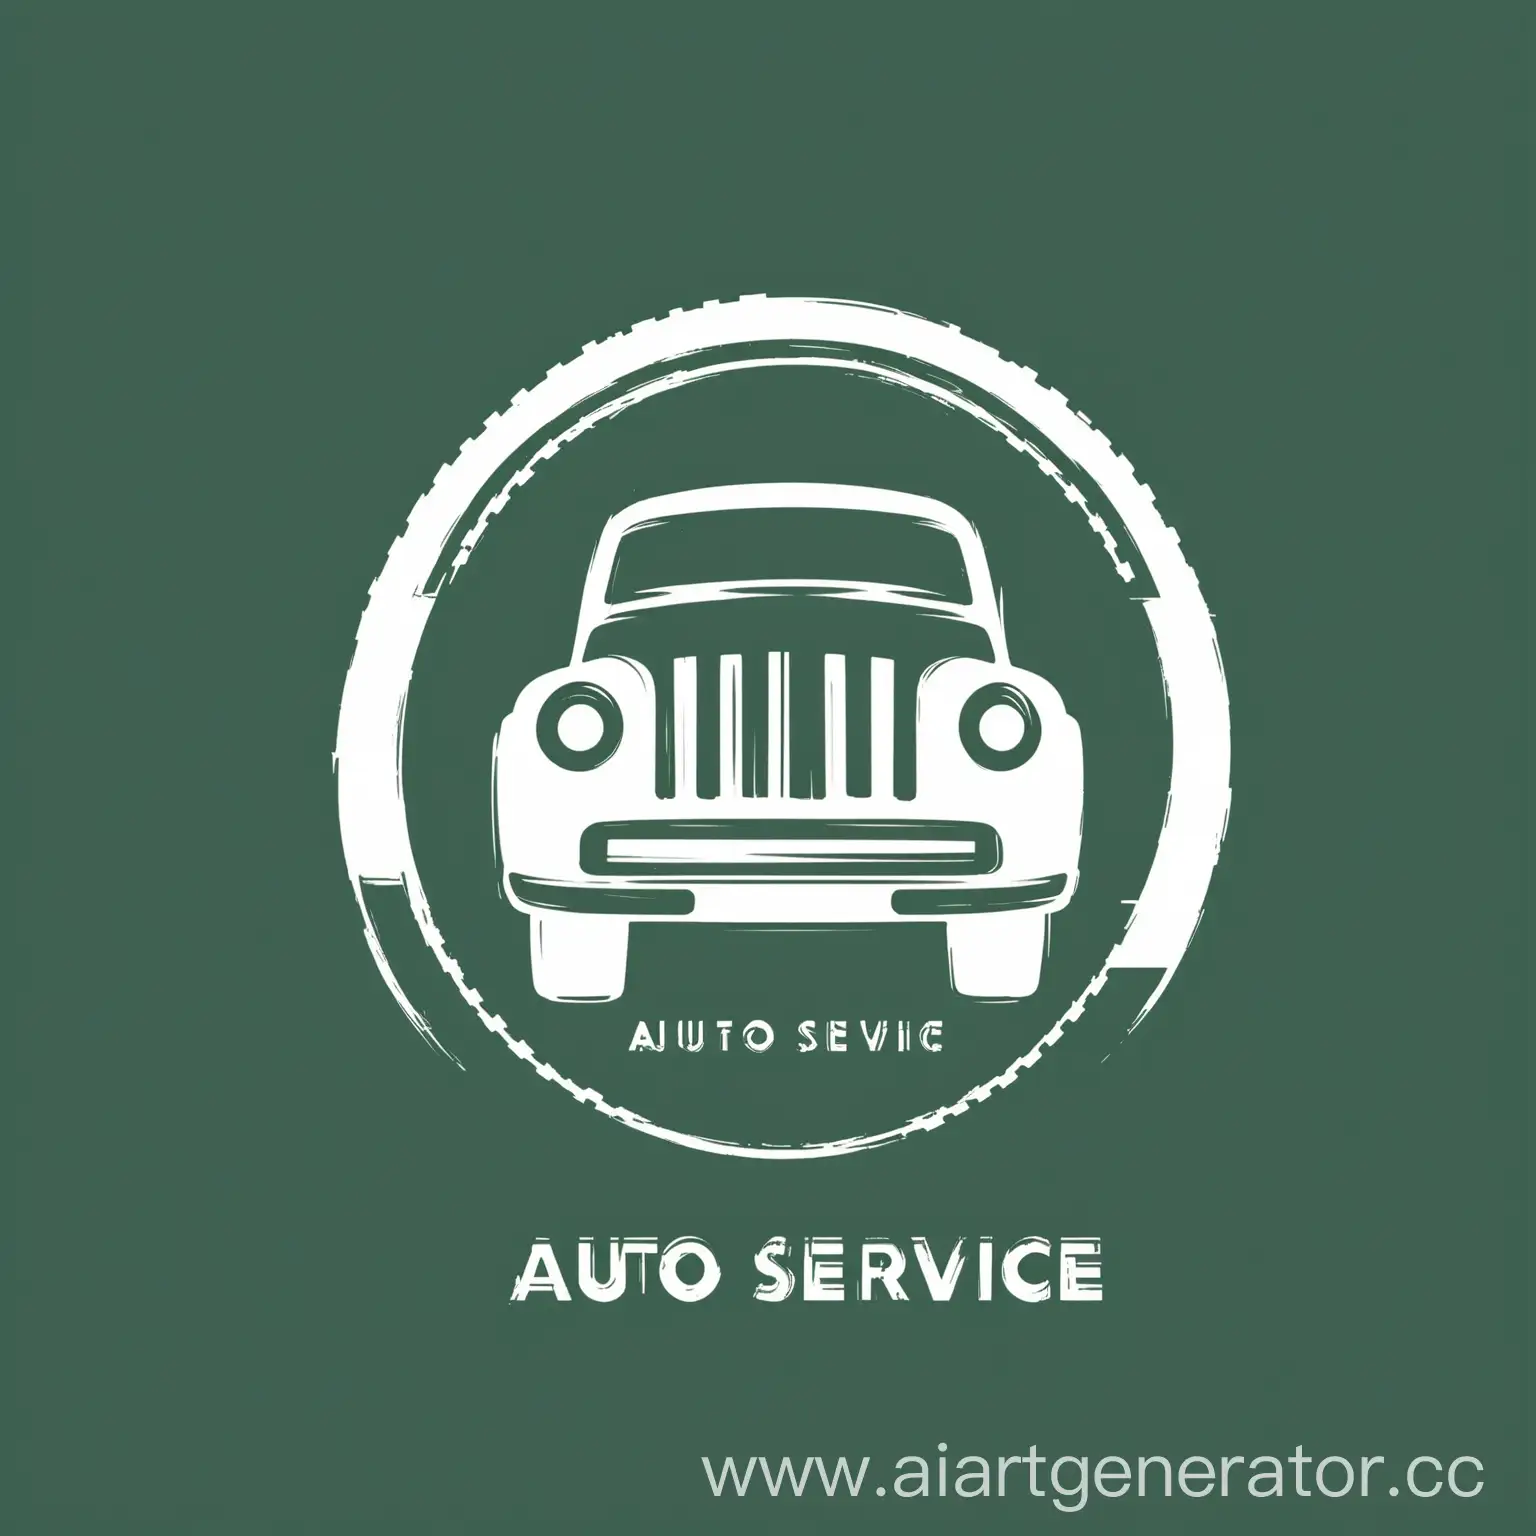 Minimalist-Auto-Service-Logo-Design